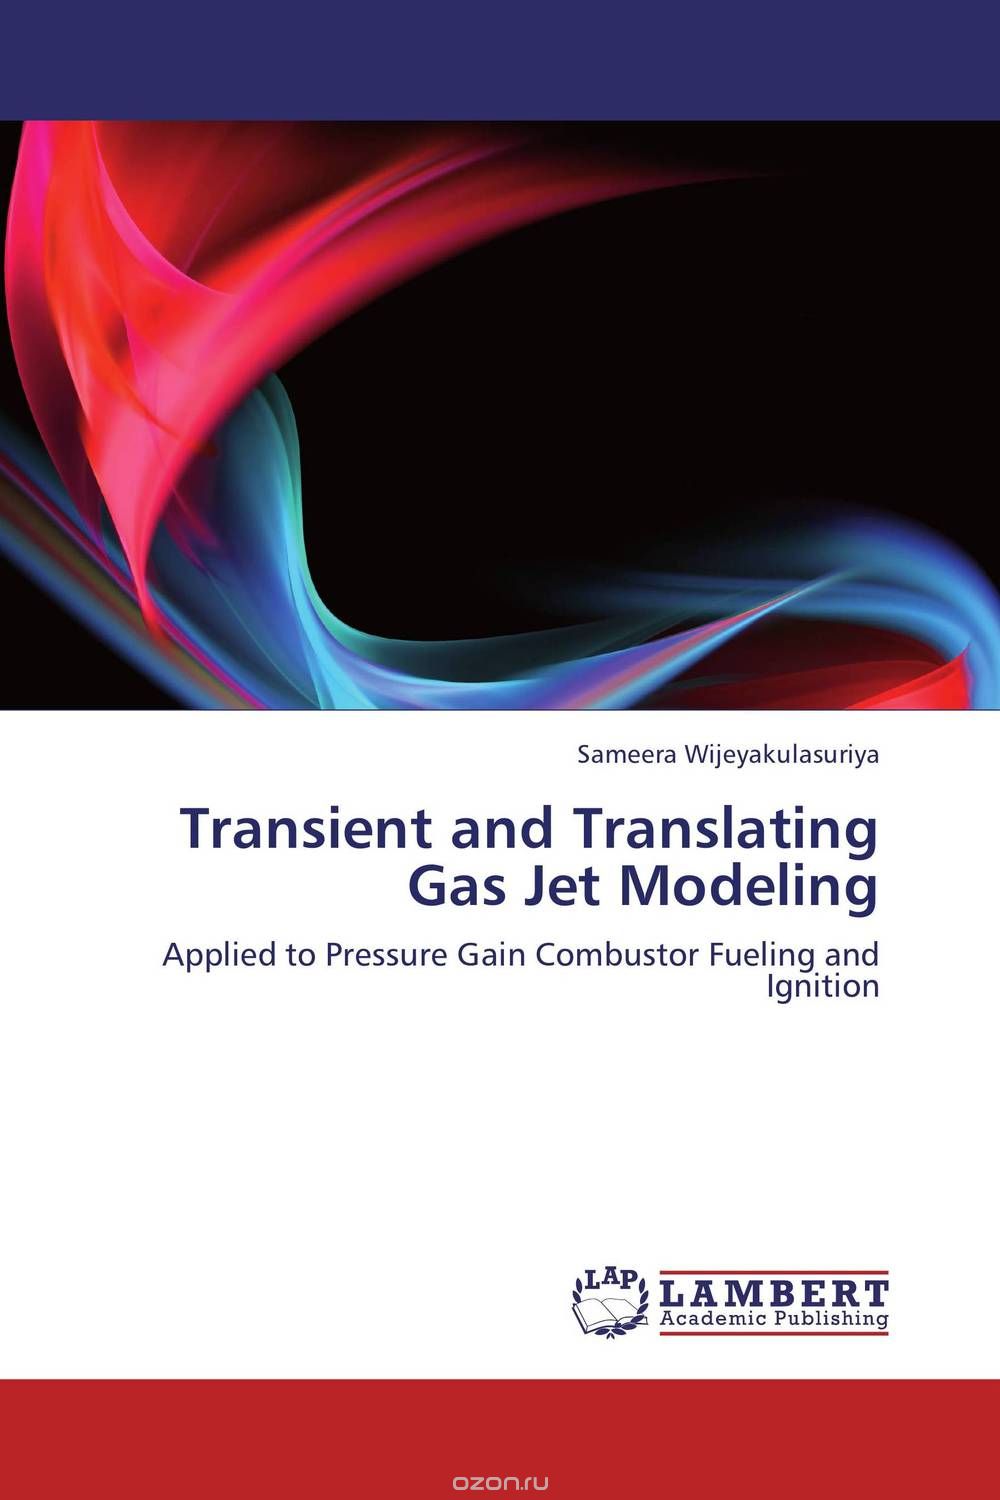 Скачать книгу "Transient and Translating Gas Jet Modeling"